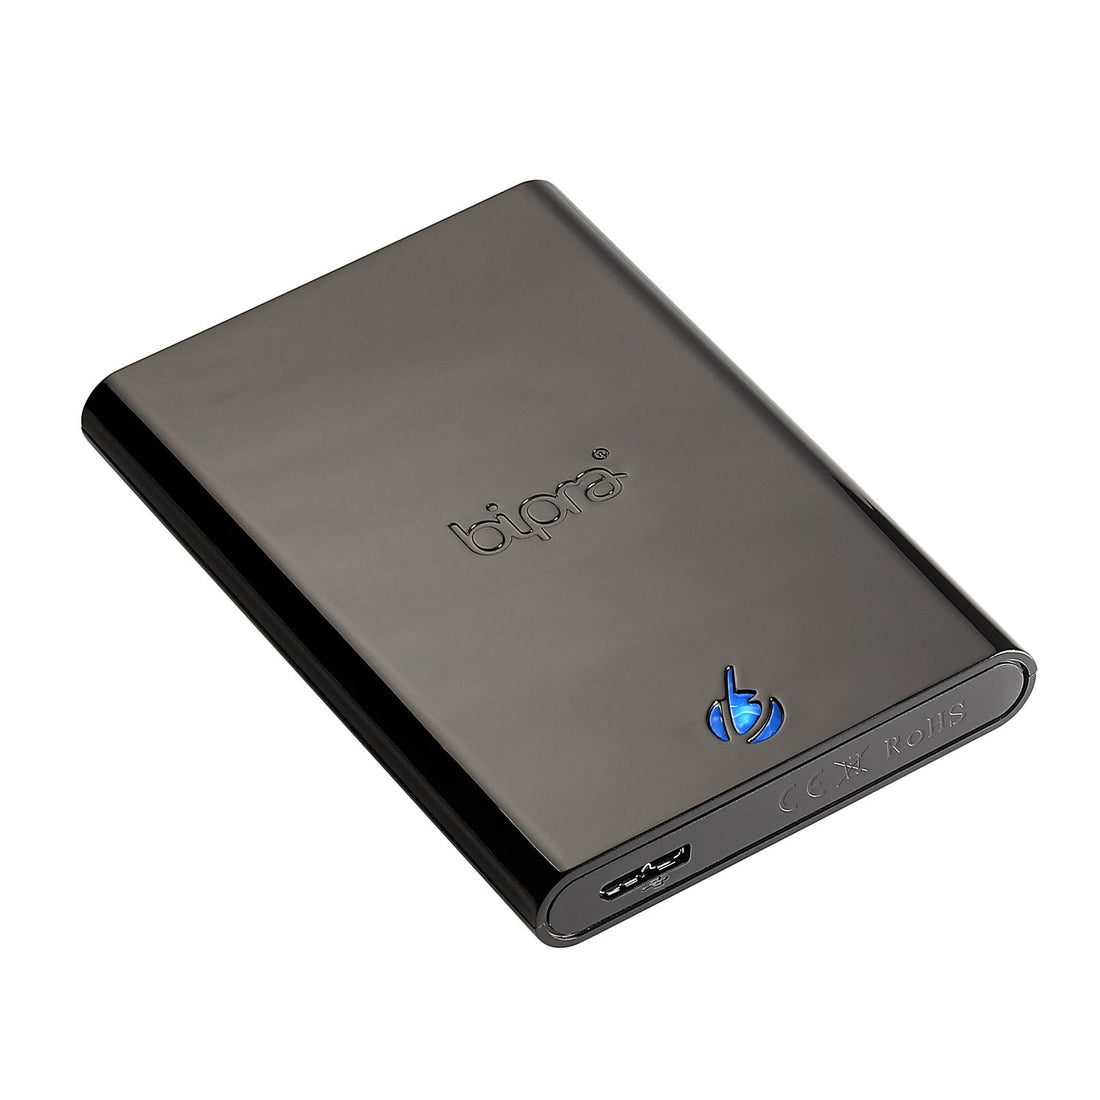 Bipra S3 2.5 inch USB 3.0 Mac Edition Portable External Hard Drive - Black (1TB 1000GB)